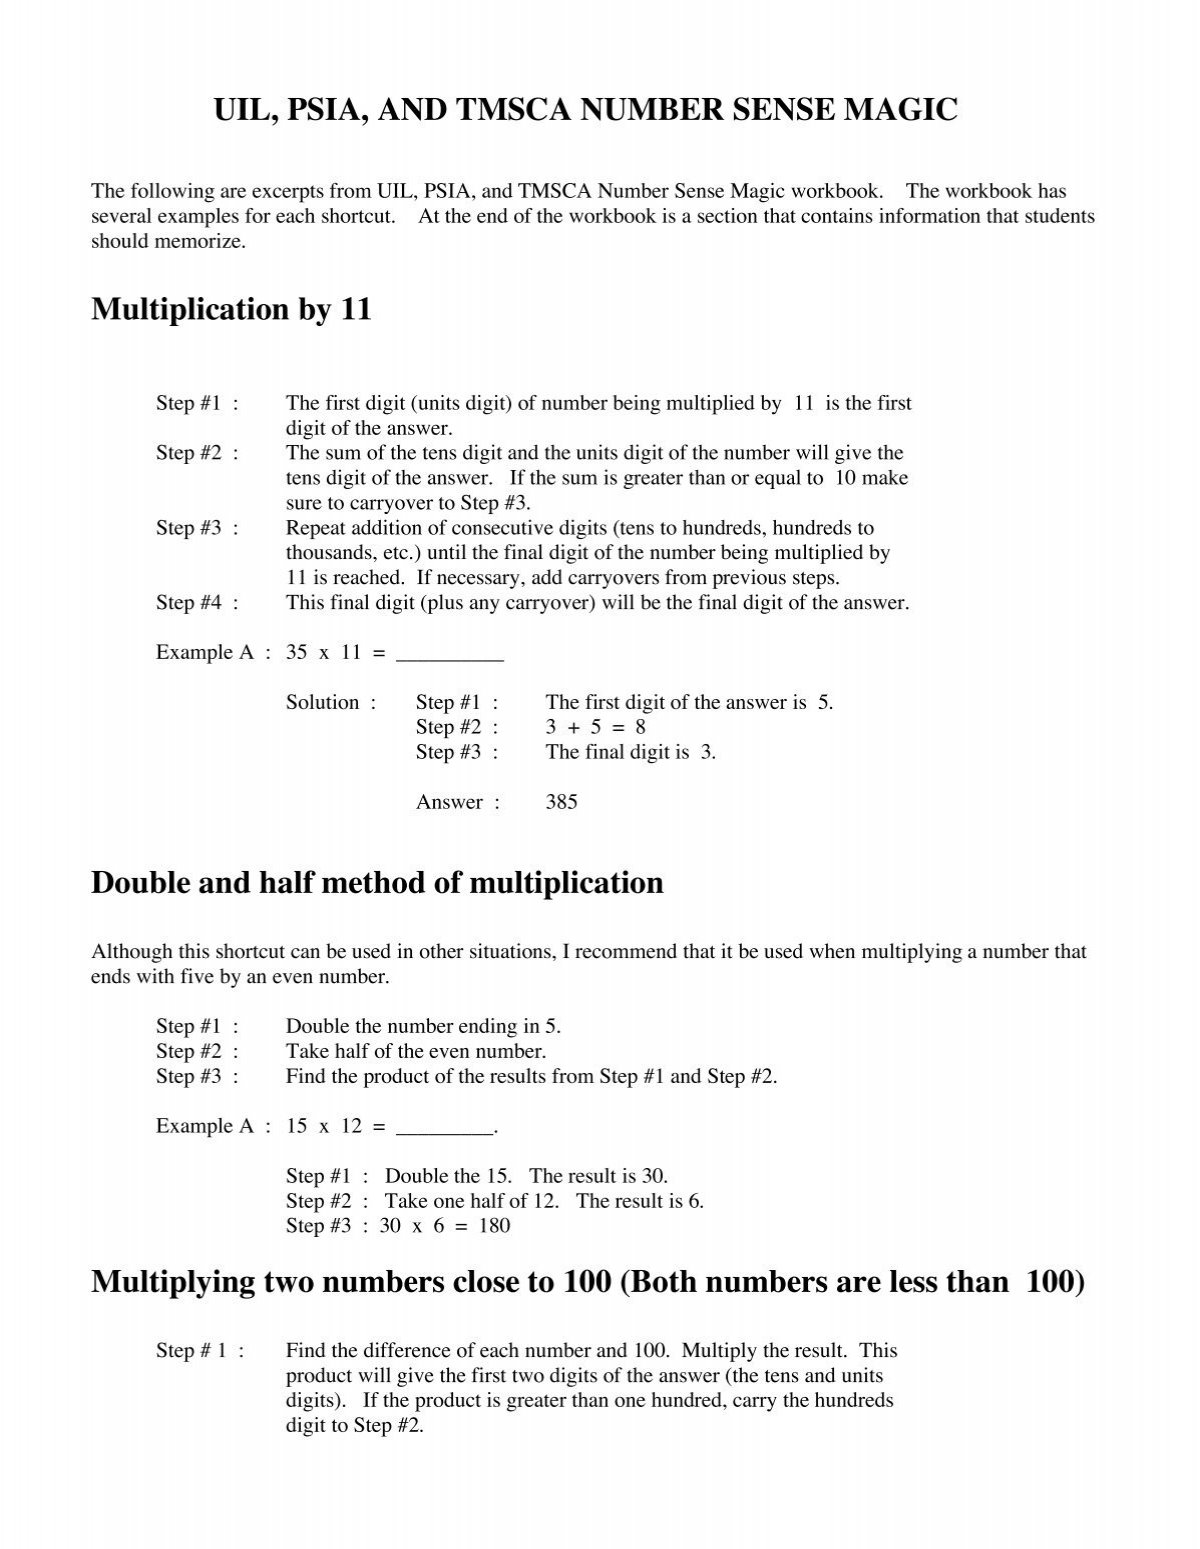 uil-psia-and-tmsca-number-sense-workbook-ram-materials